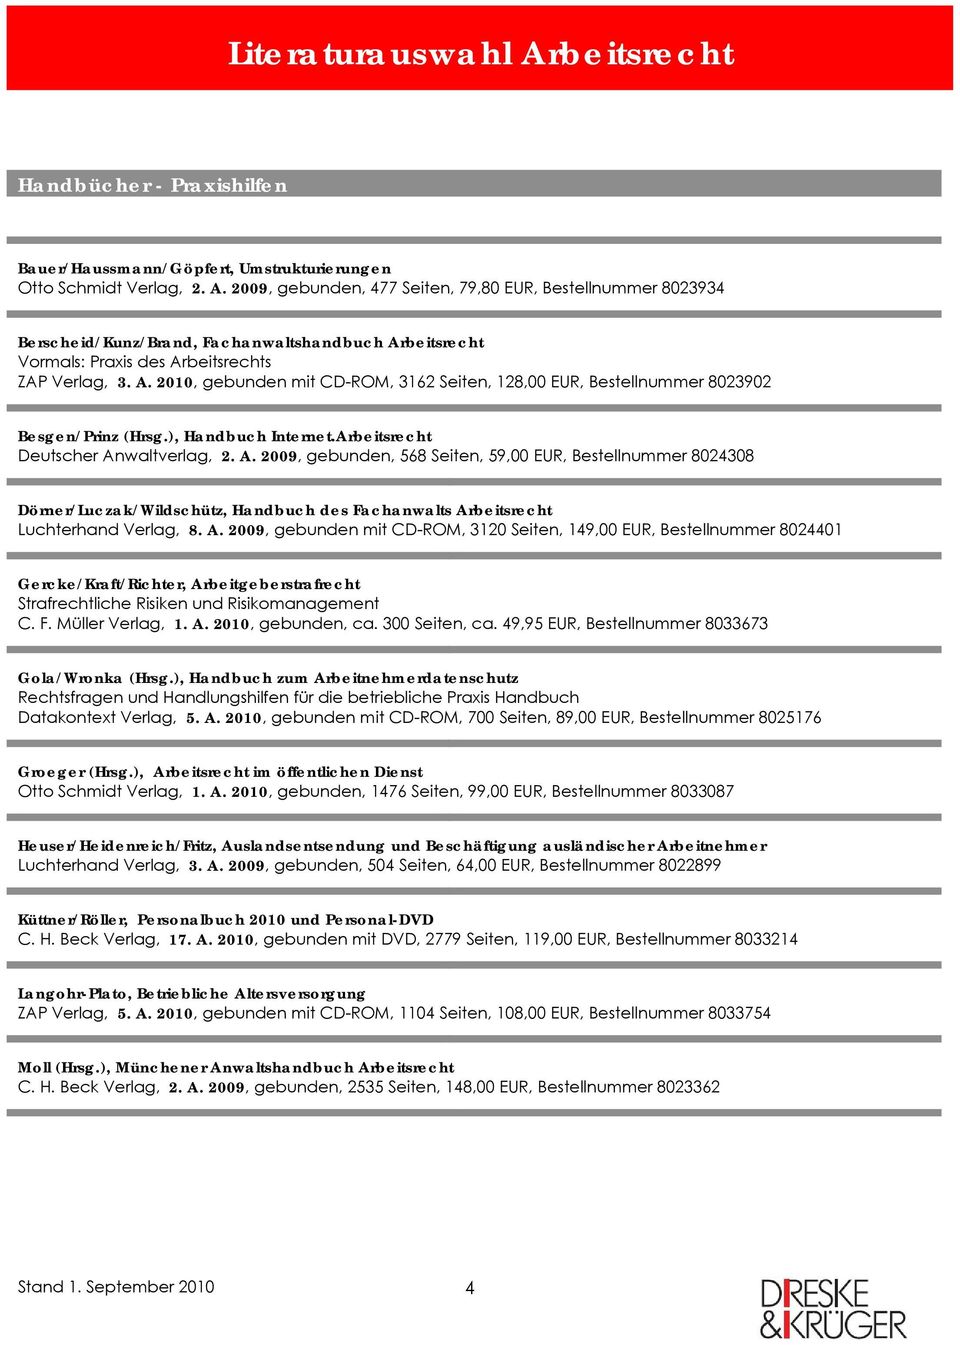 ), Handbuch Internet.Arbeitsrecht Deutscher Anwaltverlag, 2. A. 2009, gebunden, 568 Seiten, 59,00 EUR, Bestellnummer 8024308 Dörner/Luczak/Wildschütz, Handbuch des Fachanwalts Arbeitsrecht Luchterhand Verlag, 8.